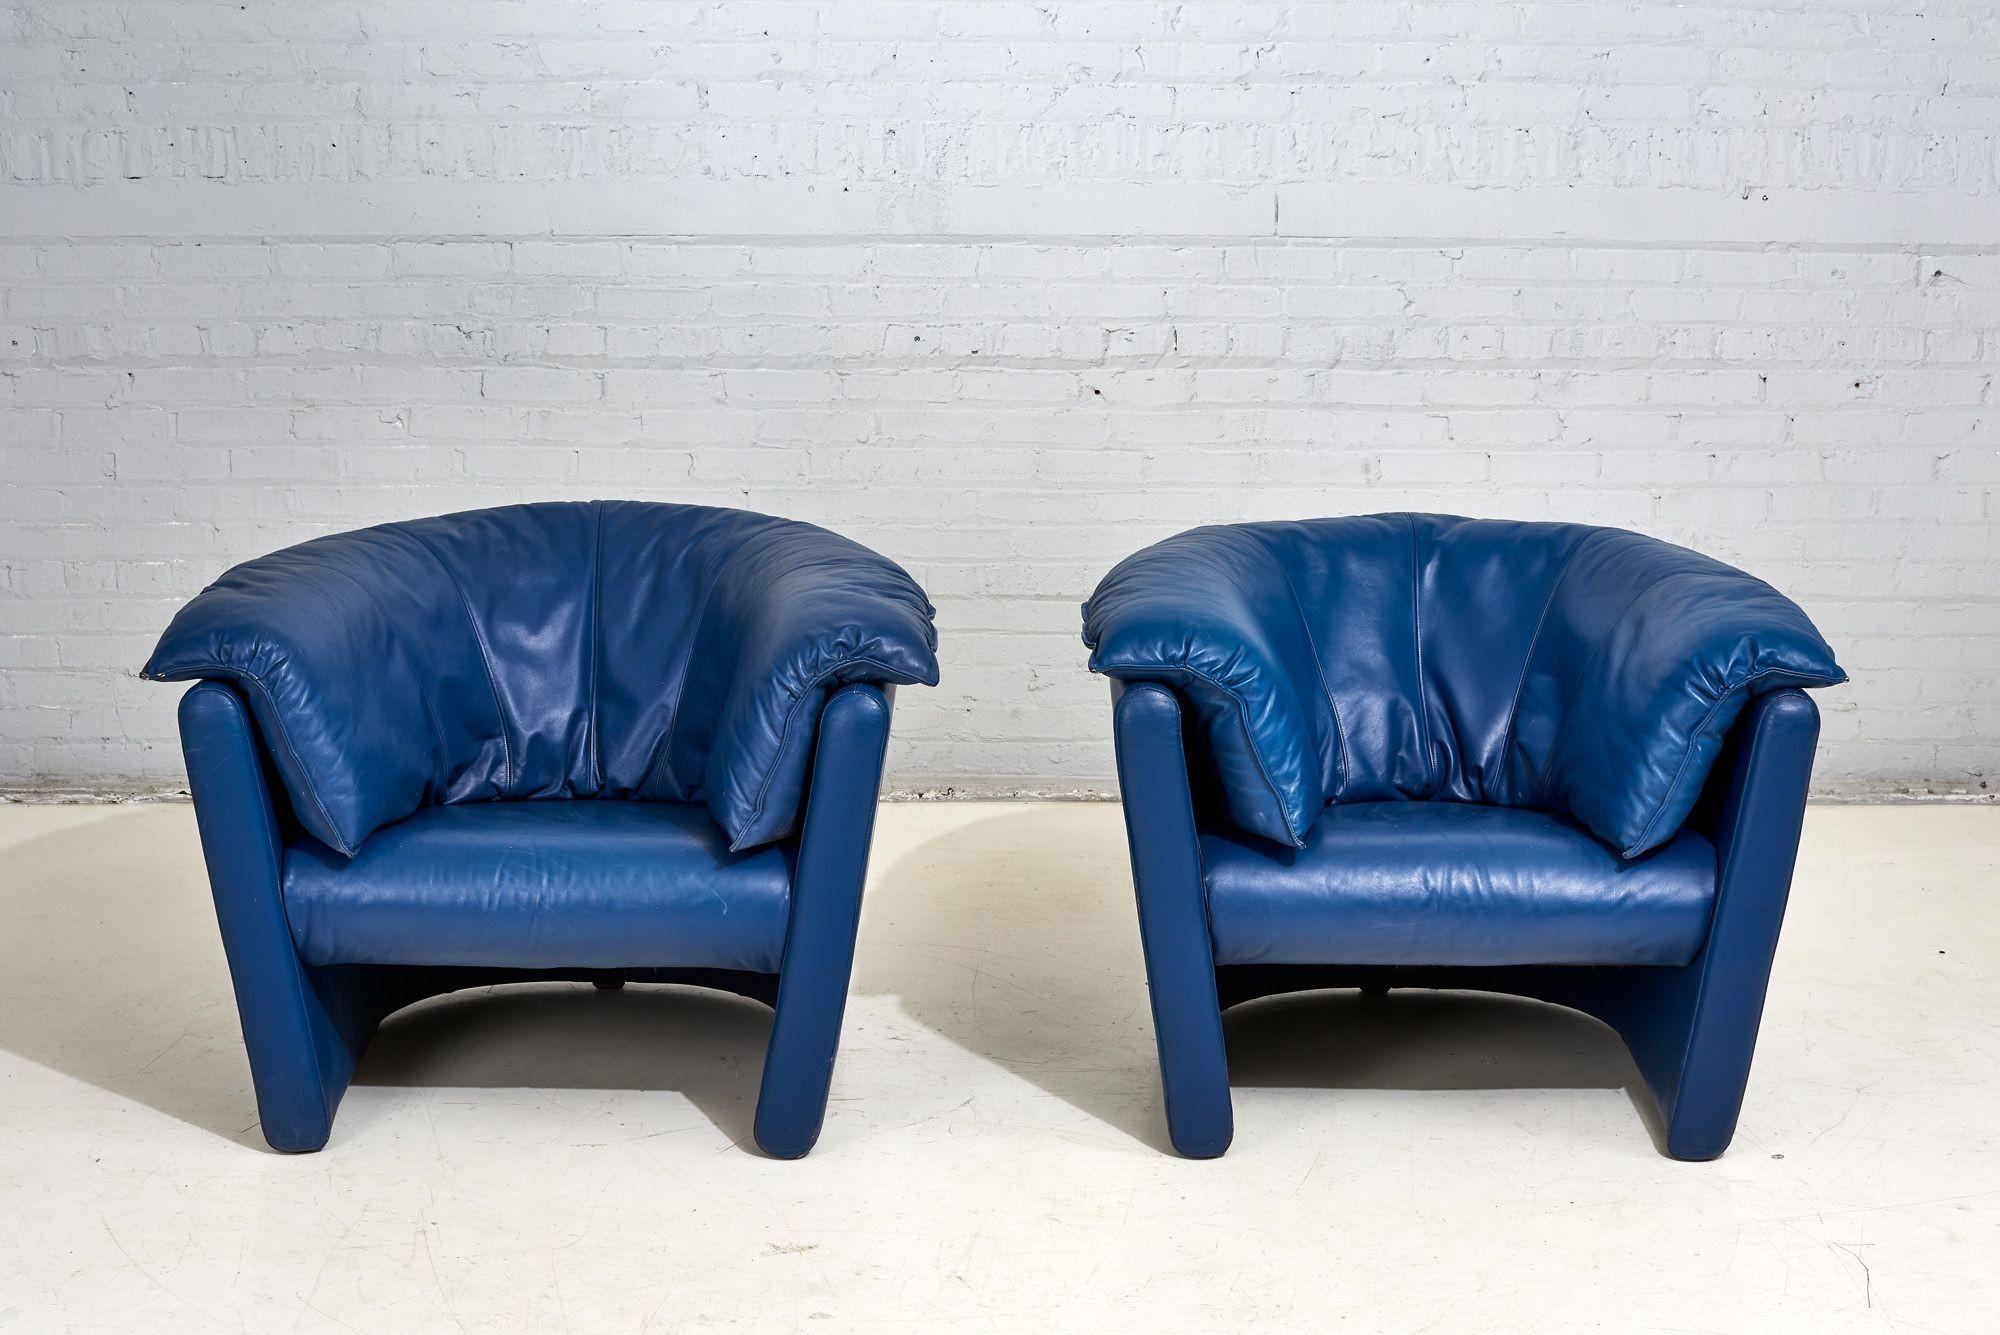 modern blue leather chair